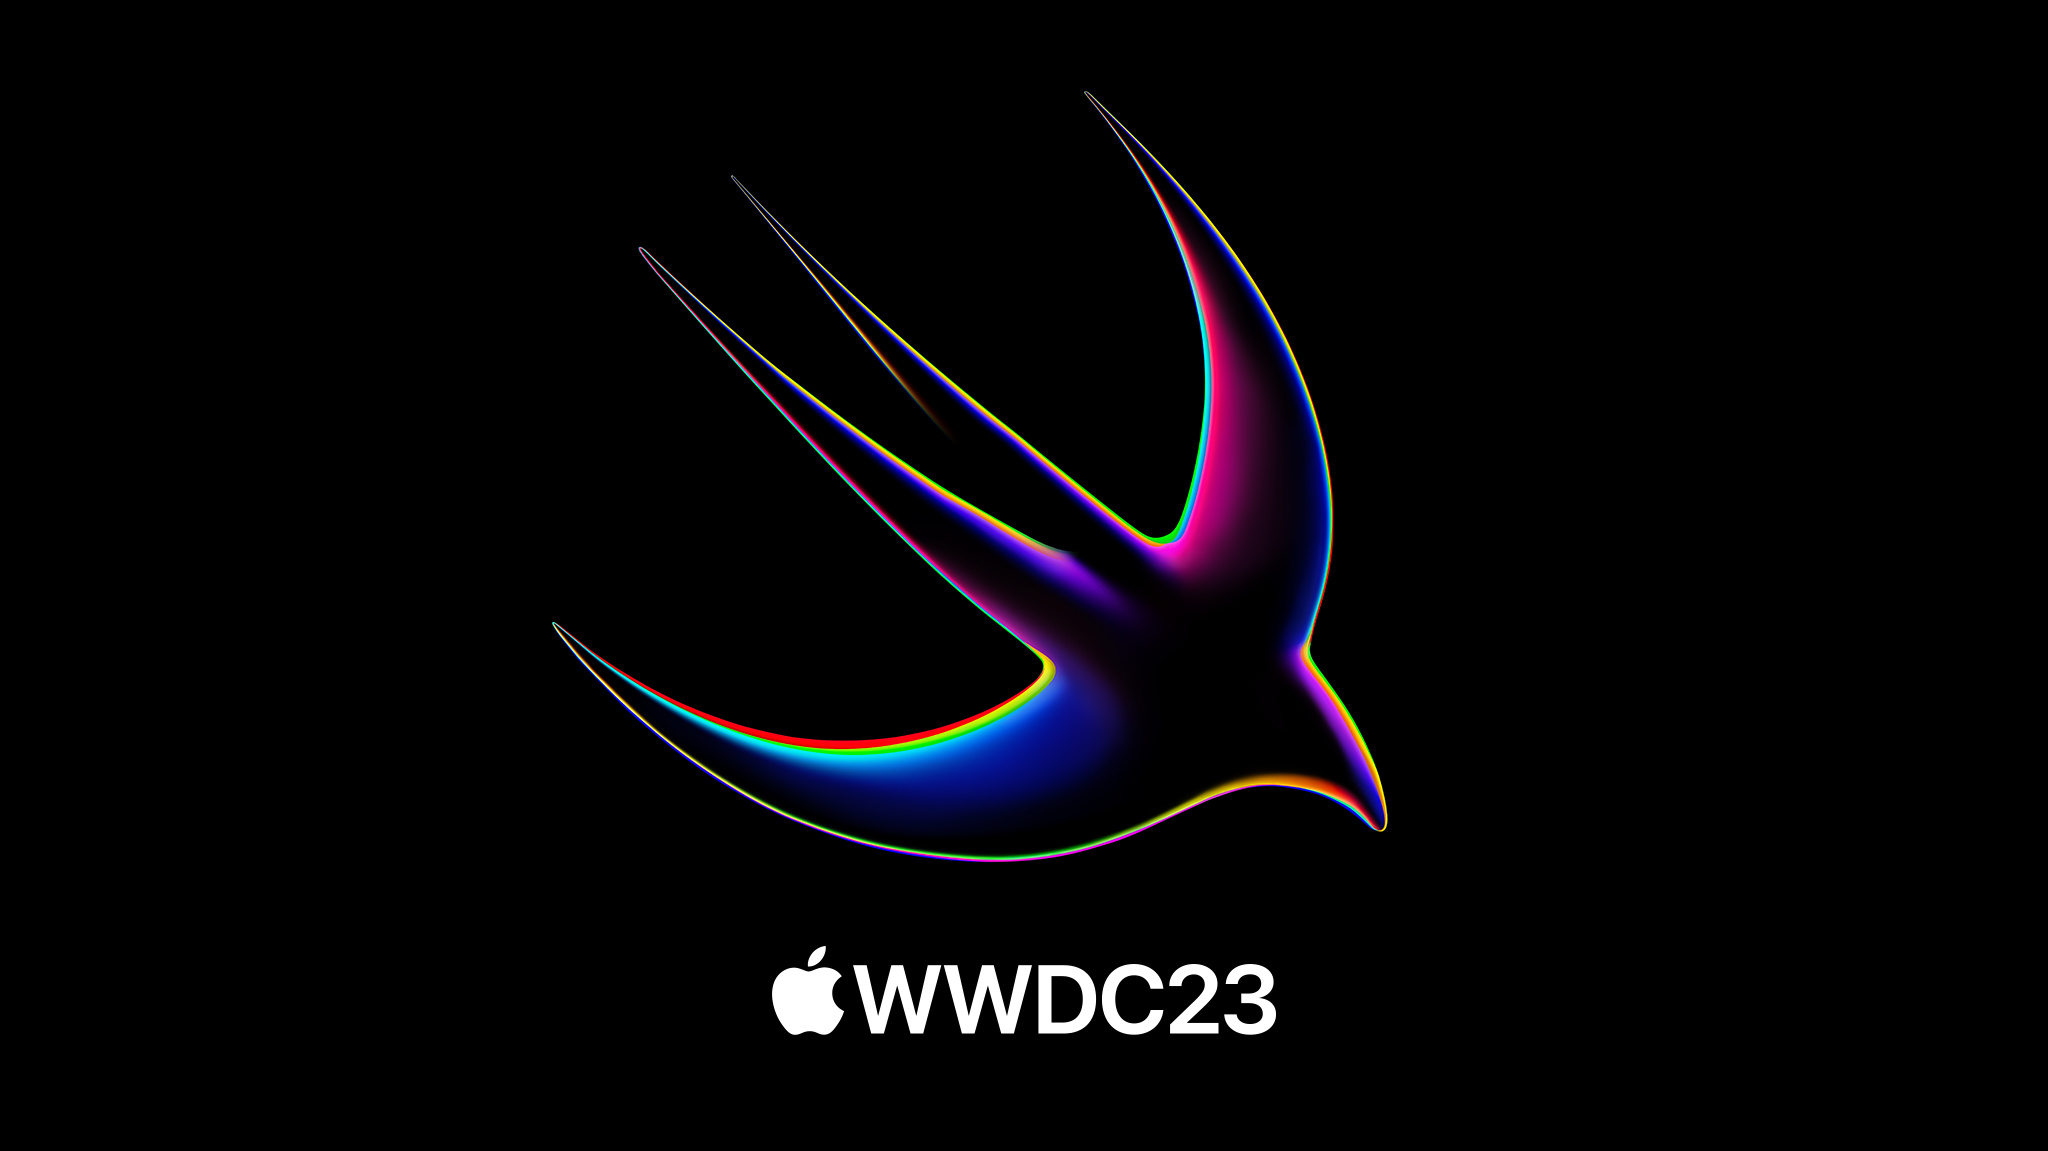 A colorful Swift logo